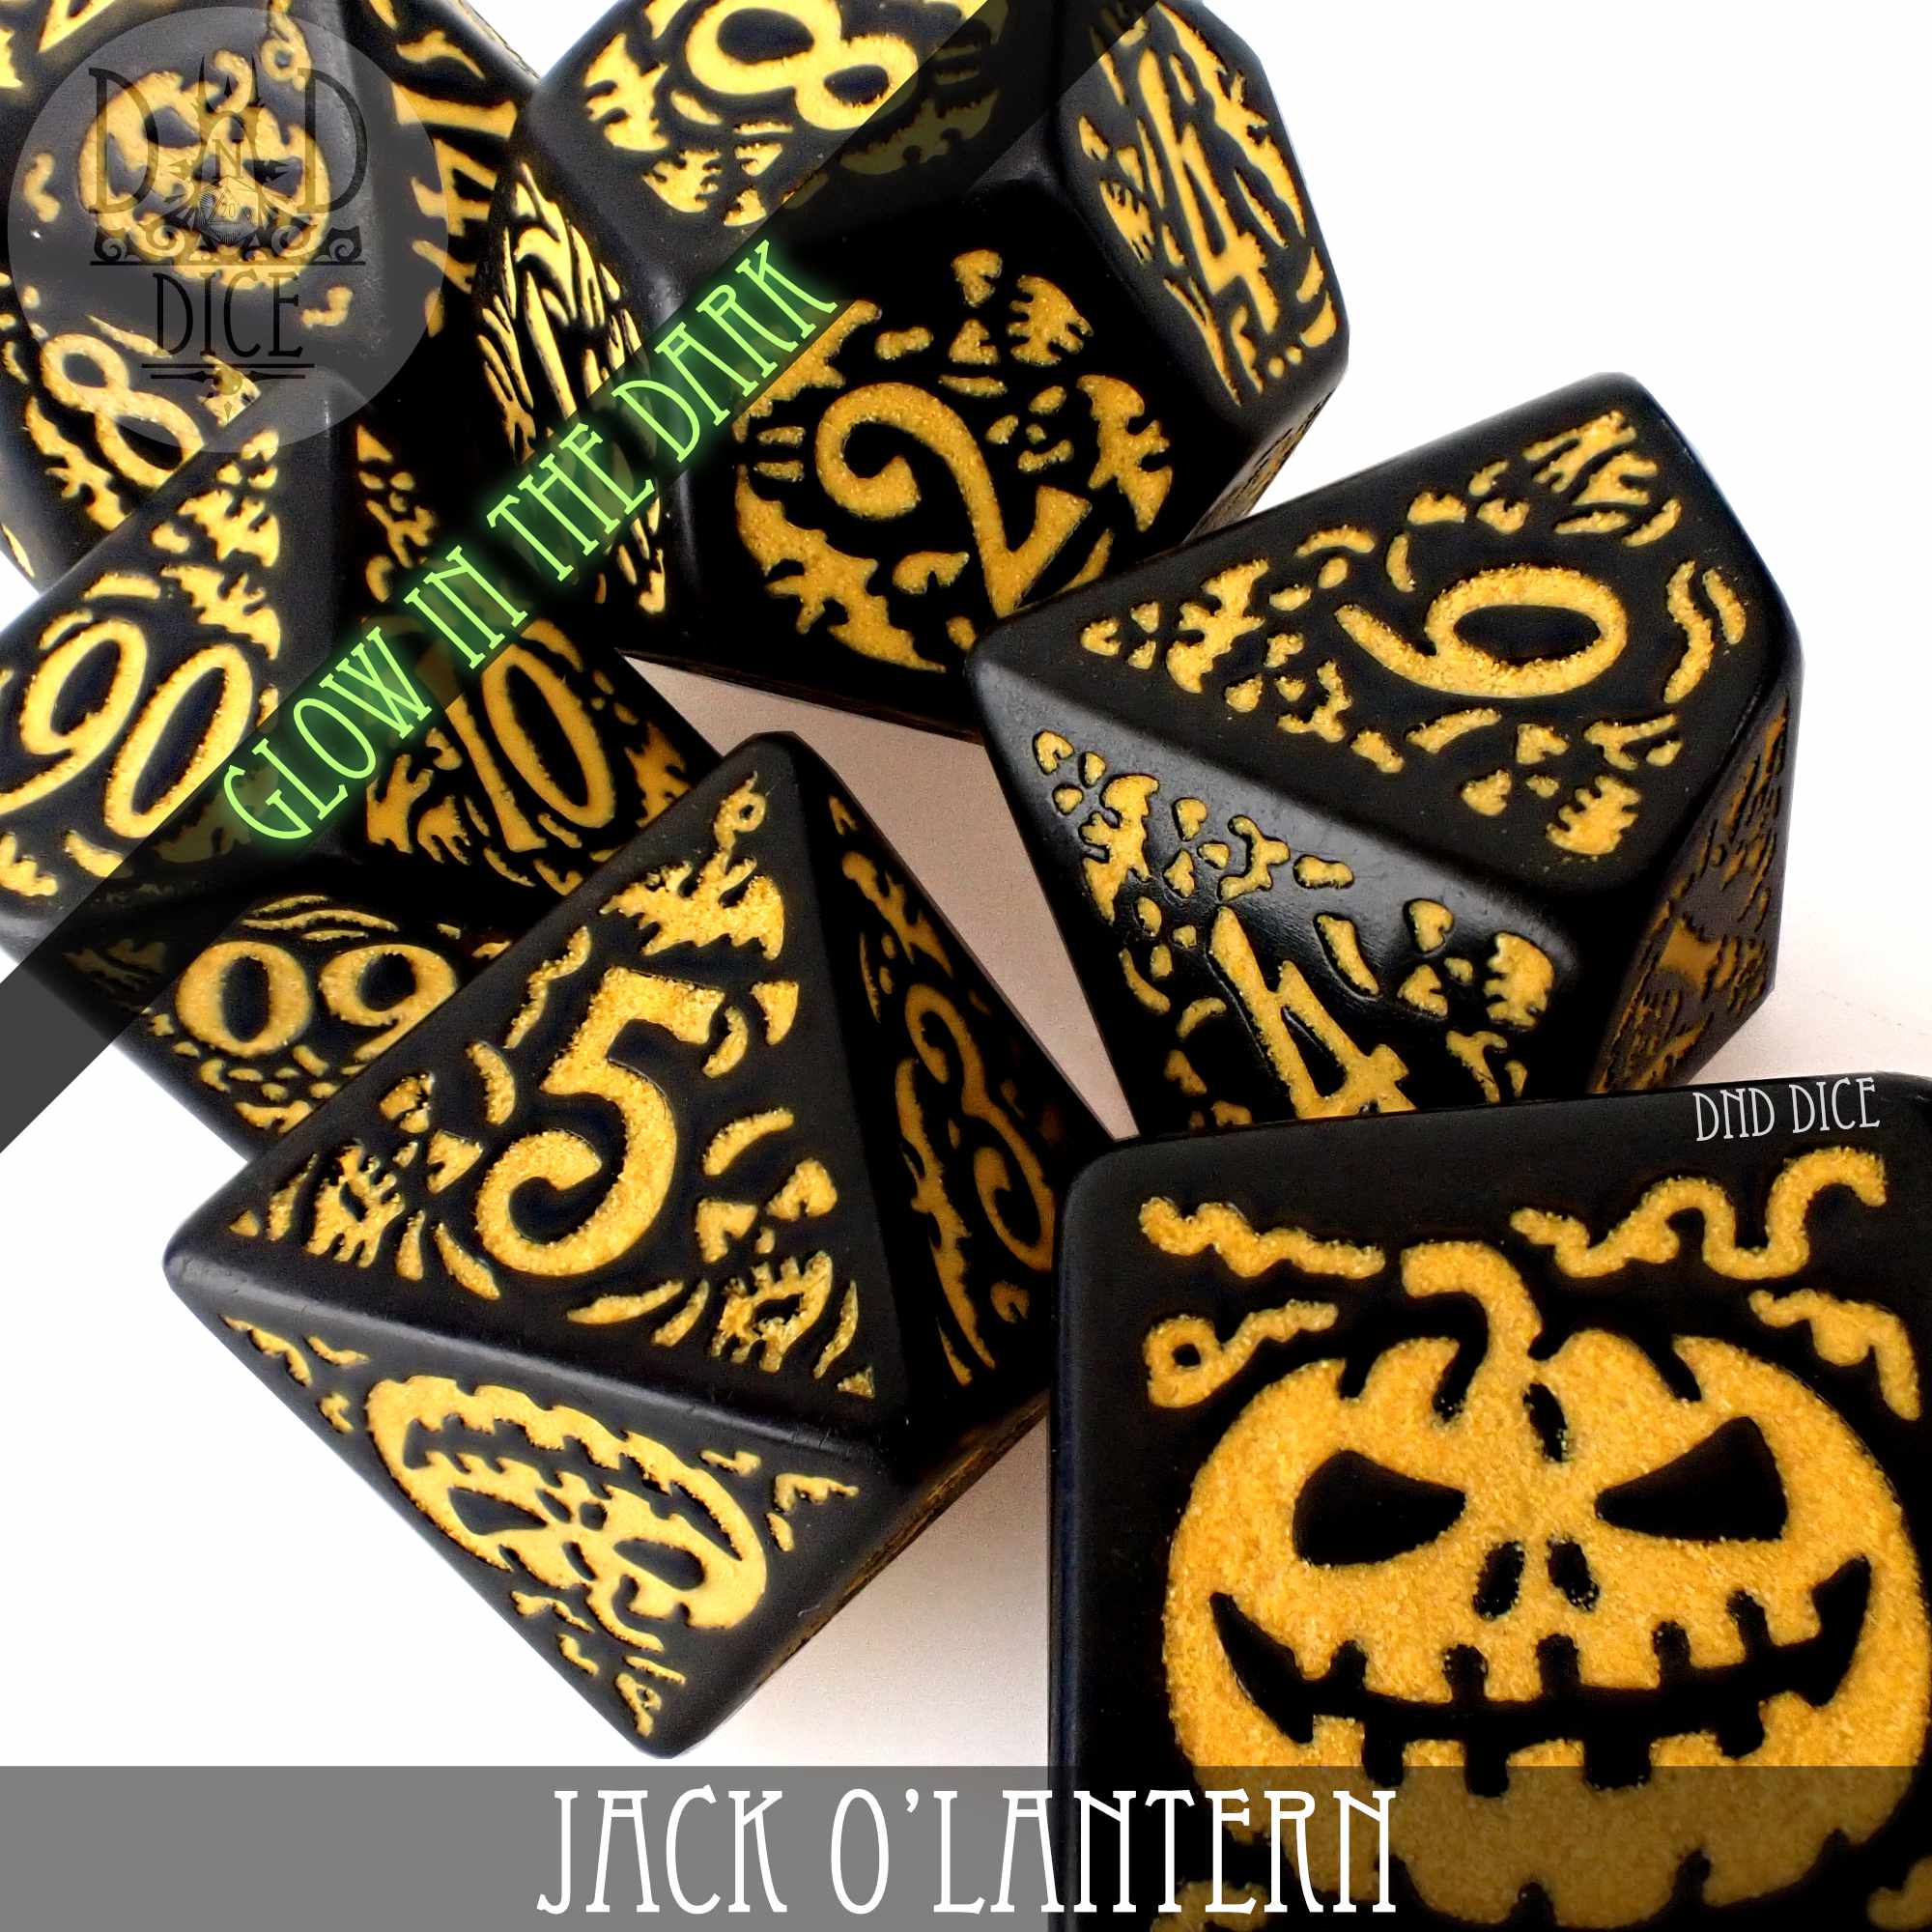 Jack O’Lantern (Glow)